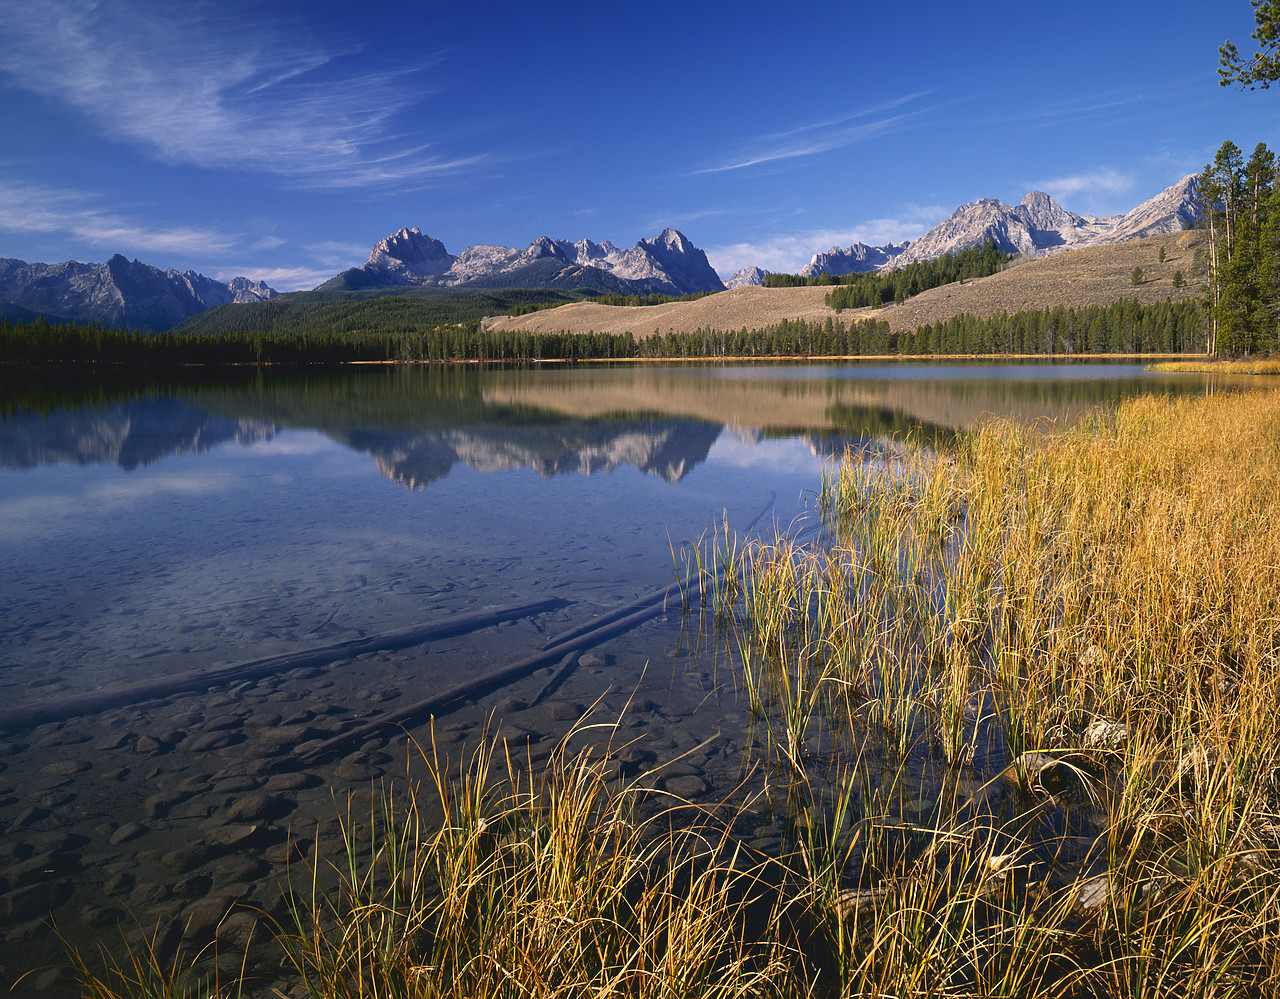 #913834-2 - Sawtooth Mountains Reflecting in Little Redfish Lake, Idaho, USA